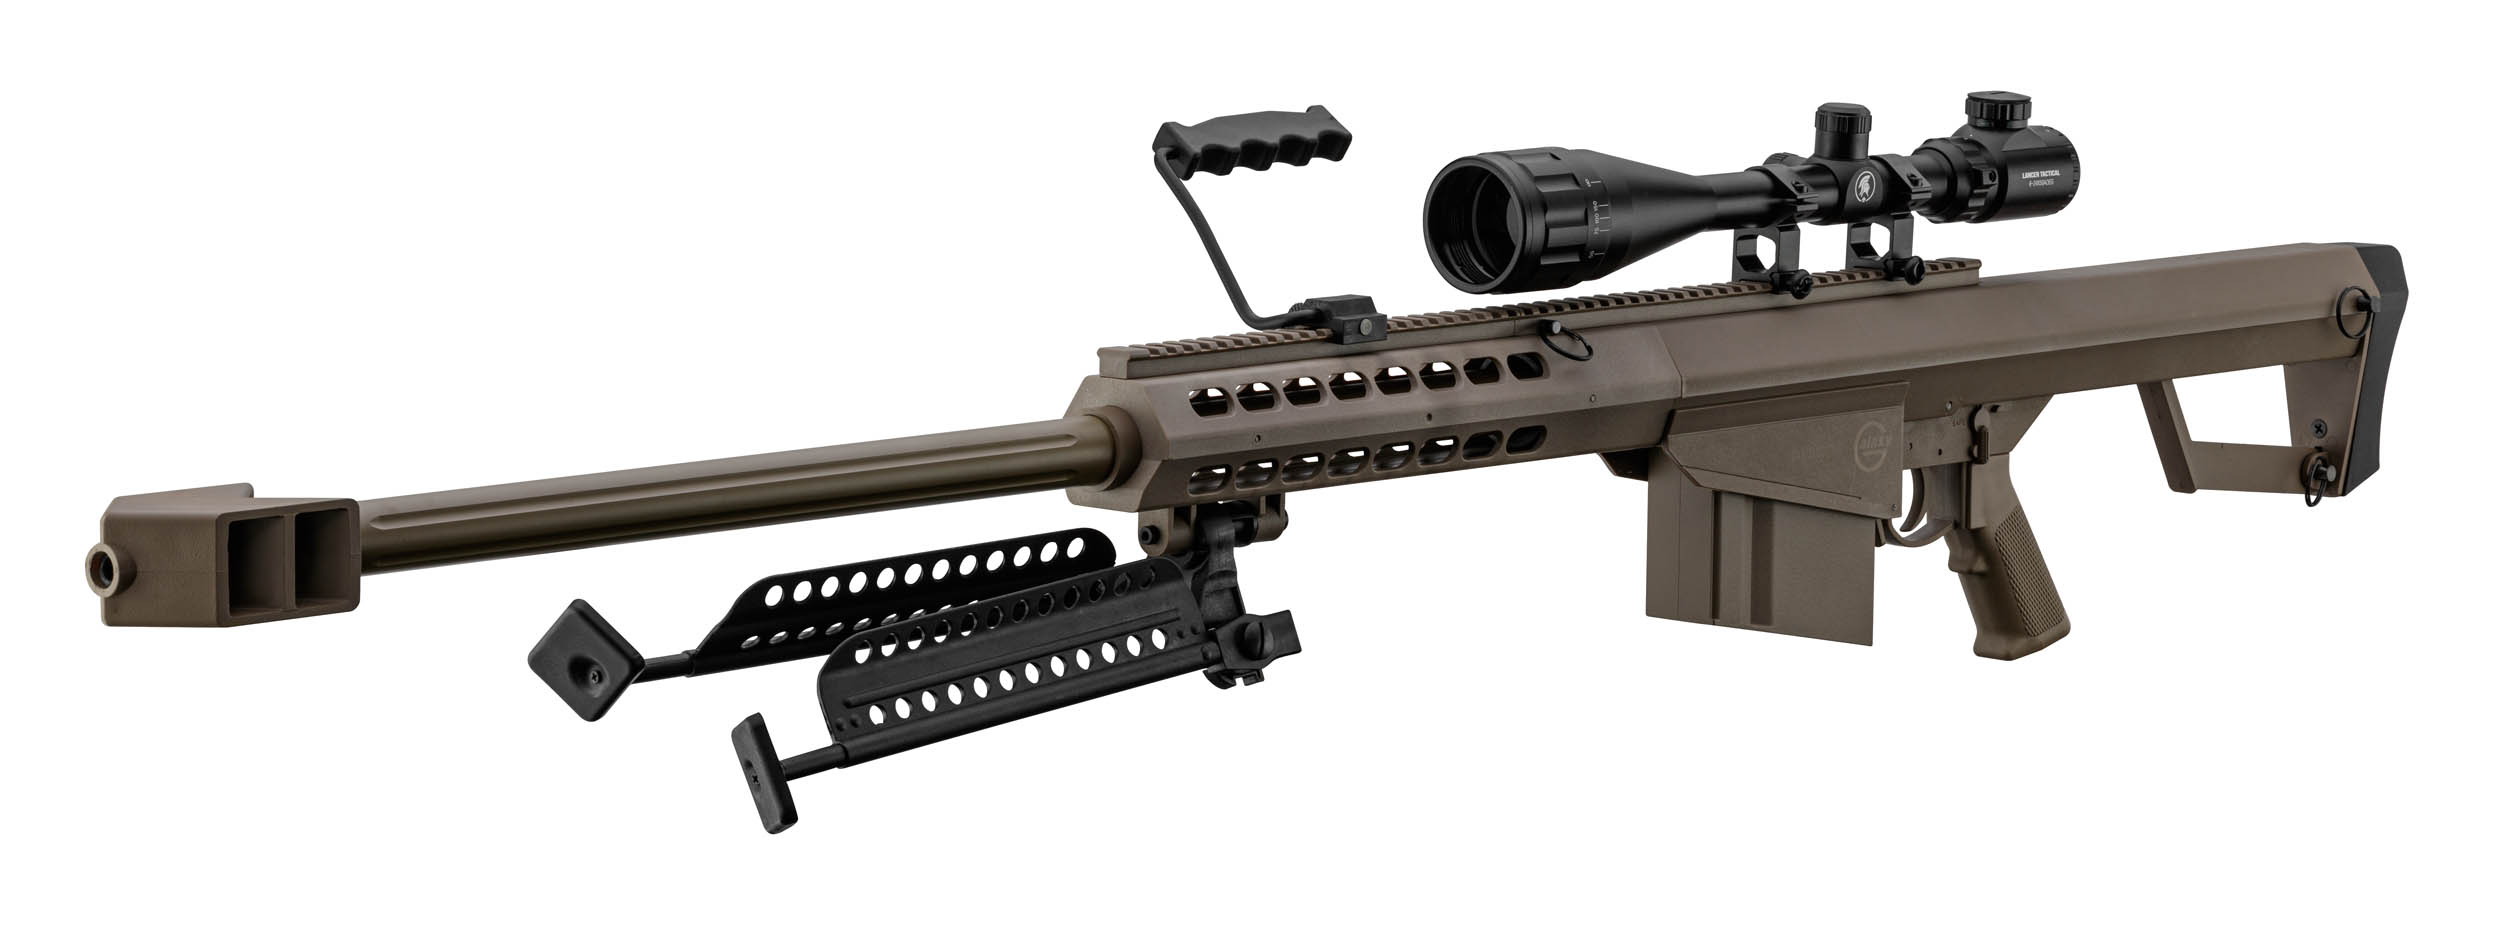 PCKLR3052-08 Pack Sniper LT-20 tan M82 1,5J + lunette + bi-pied + poignée